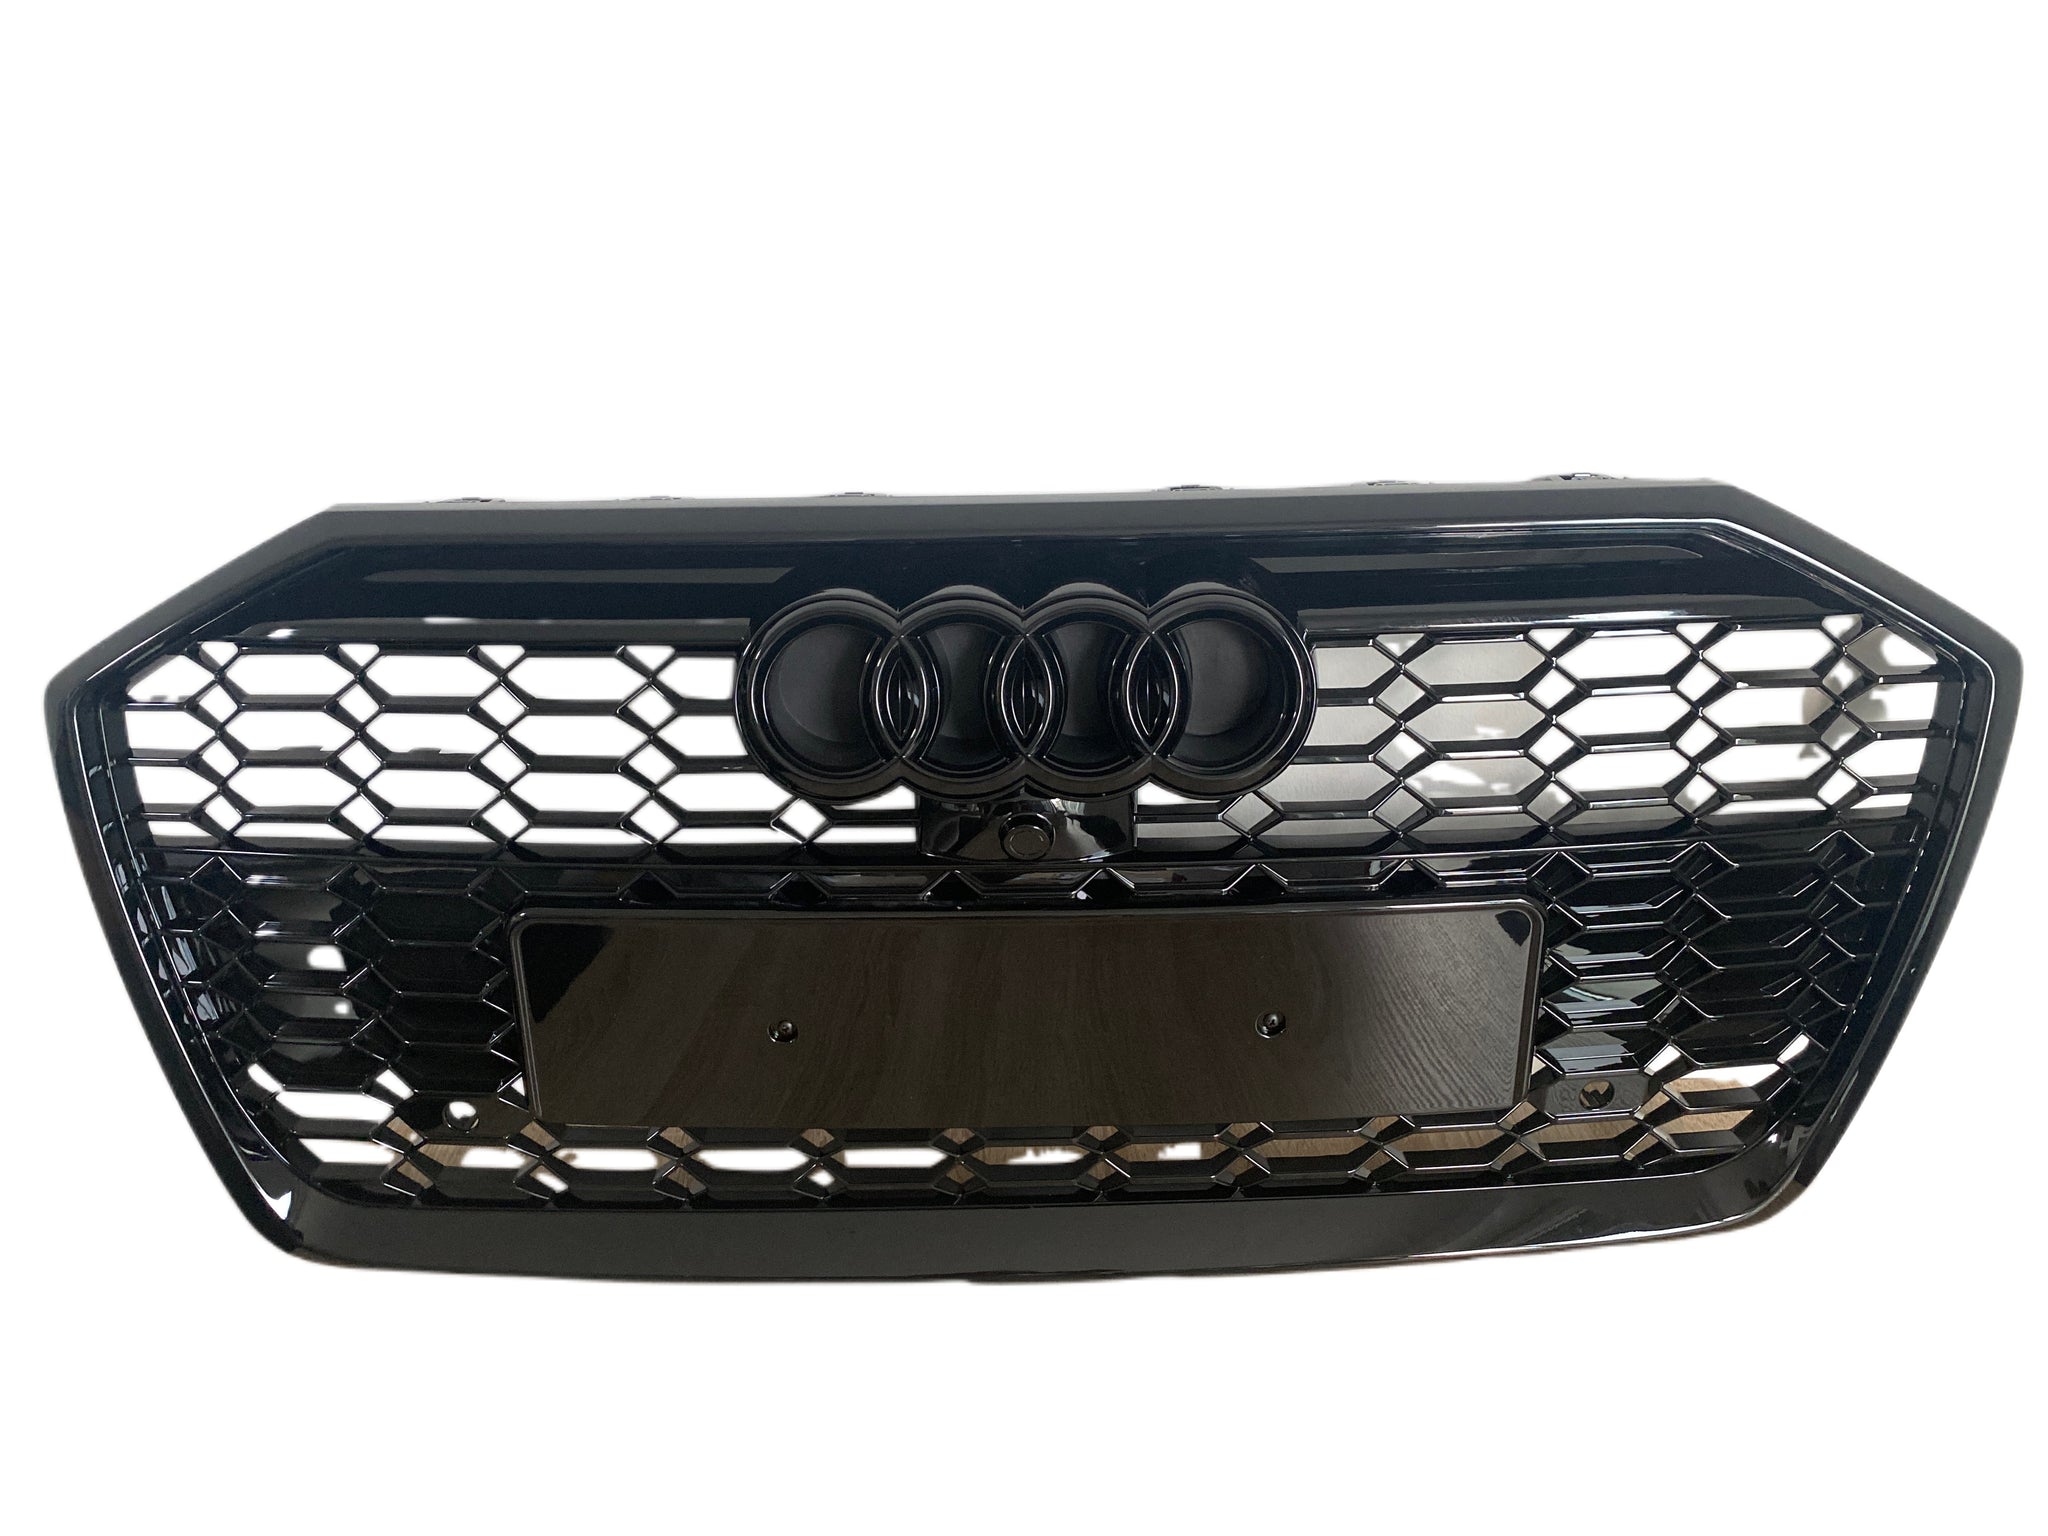 Neu Audi Black Edition Ringe Schwarz Kühlergrill für Audi A1 A3 A4 A5 A6 A7